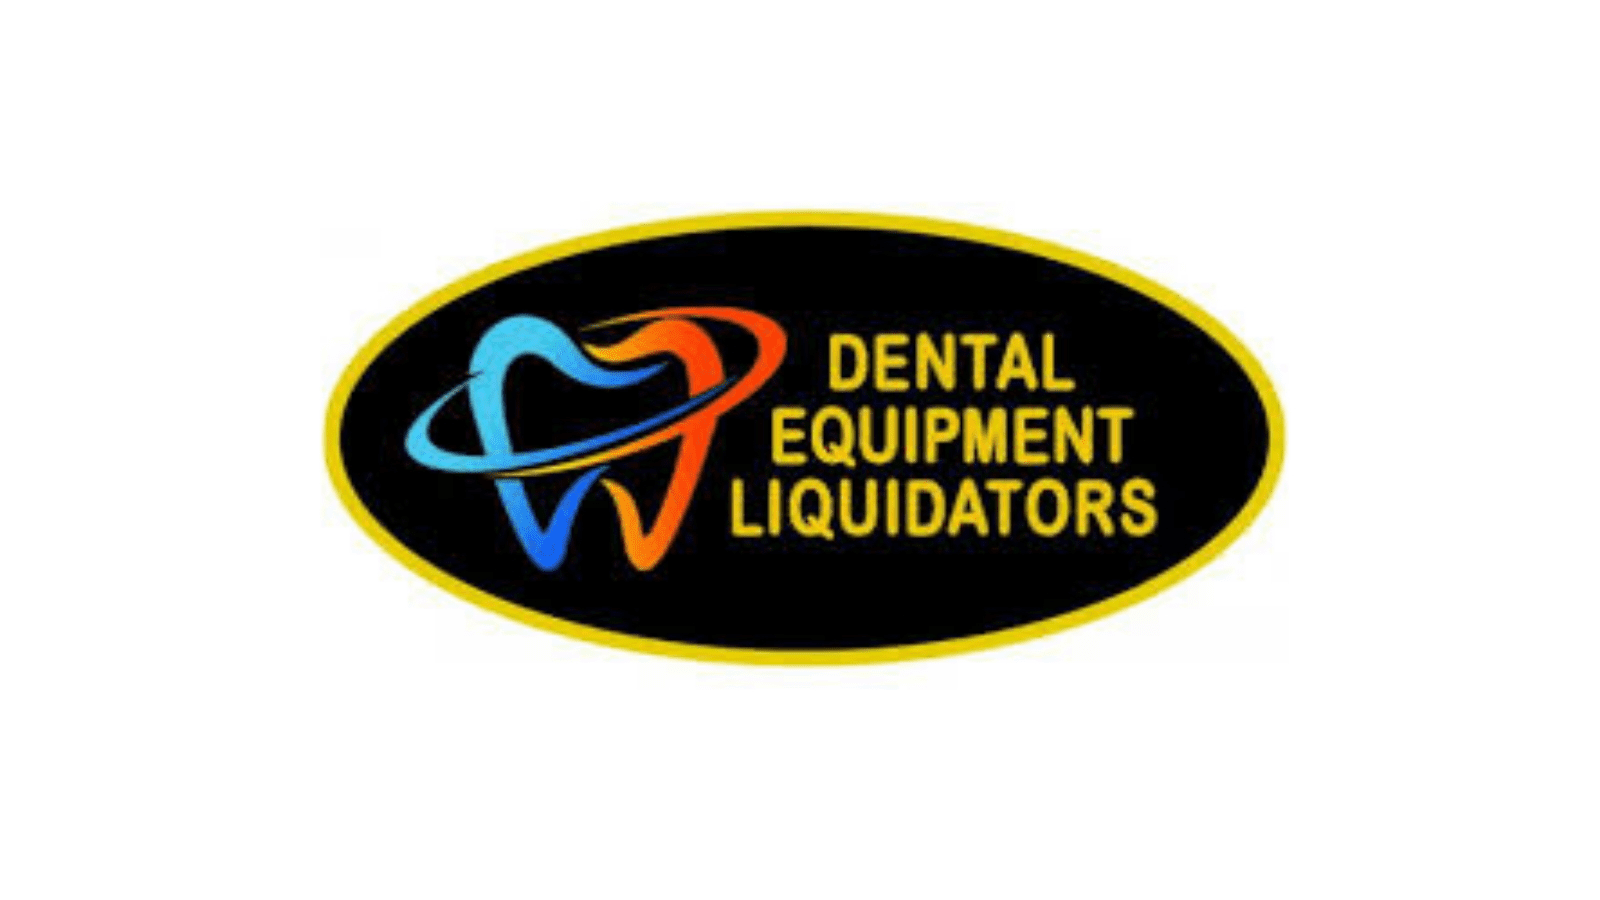 Dental equipment liquidators logo